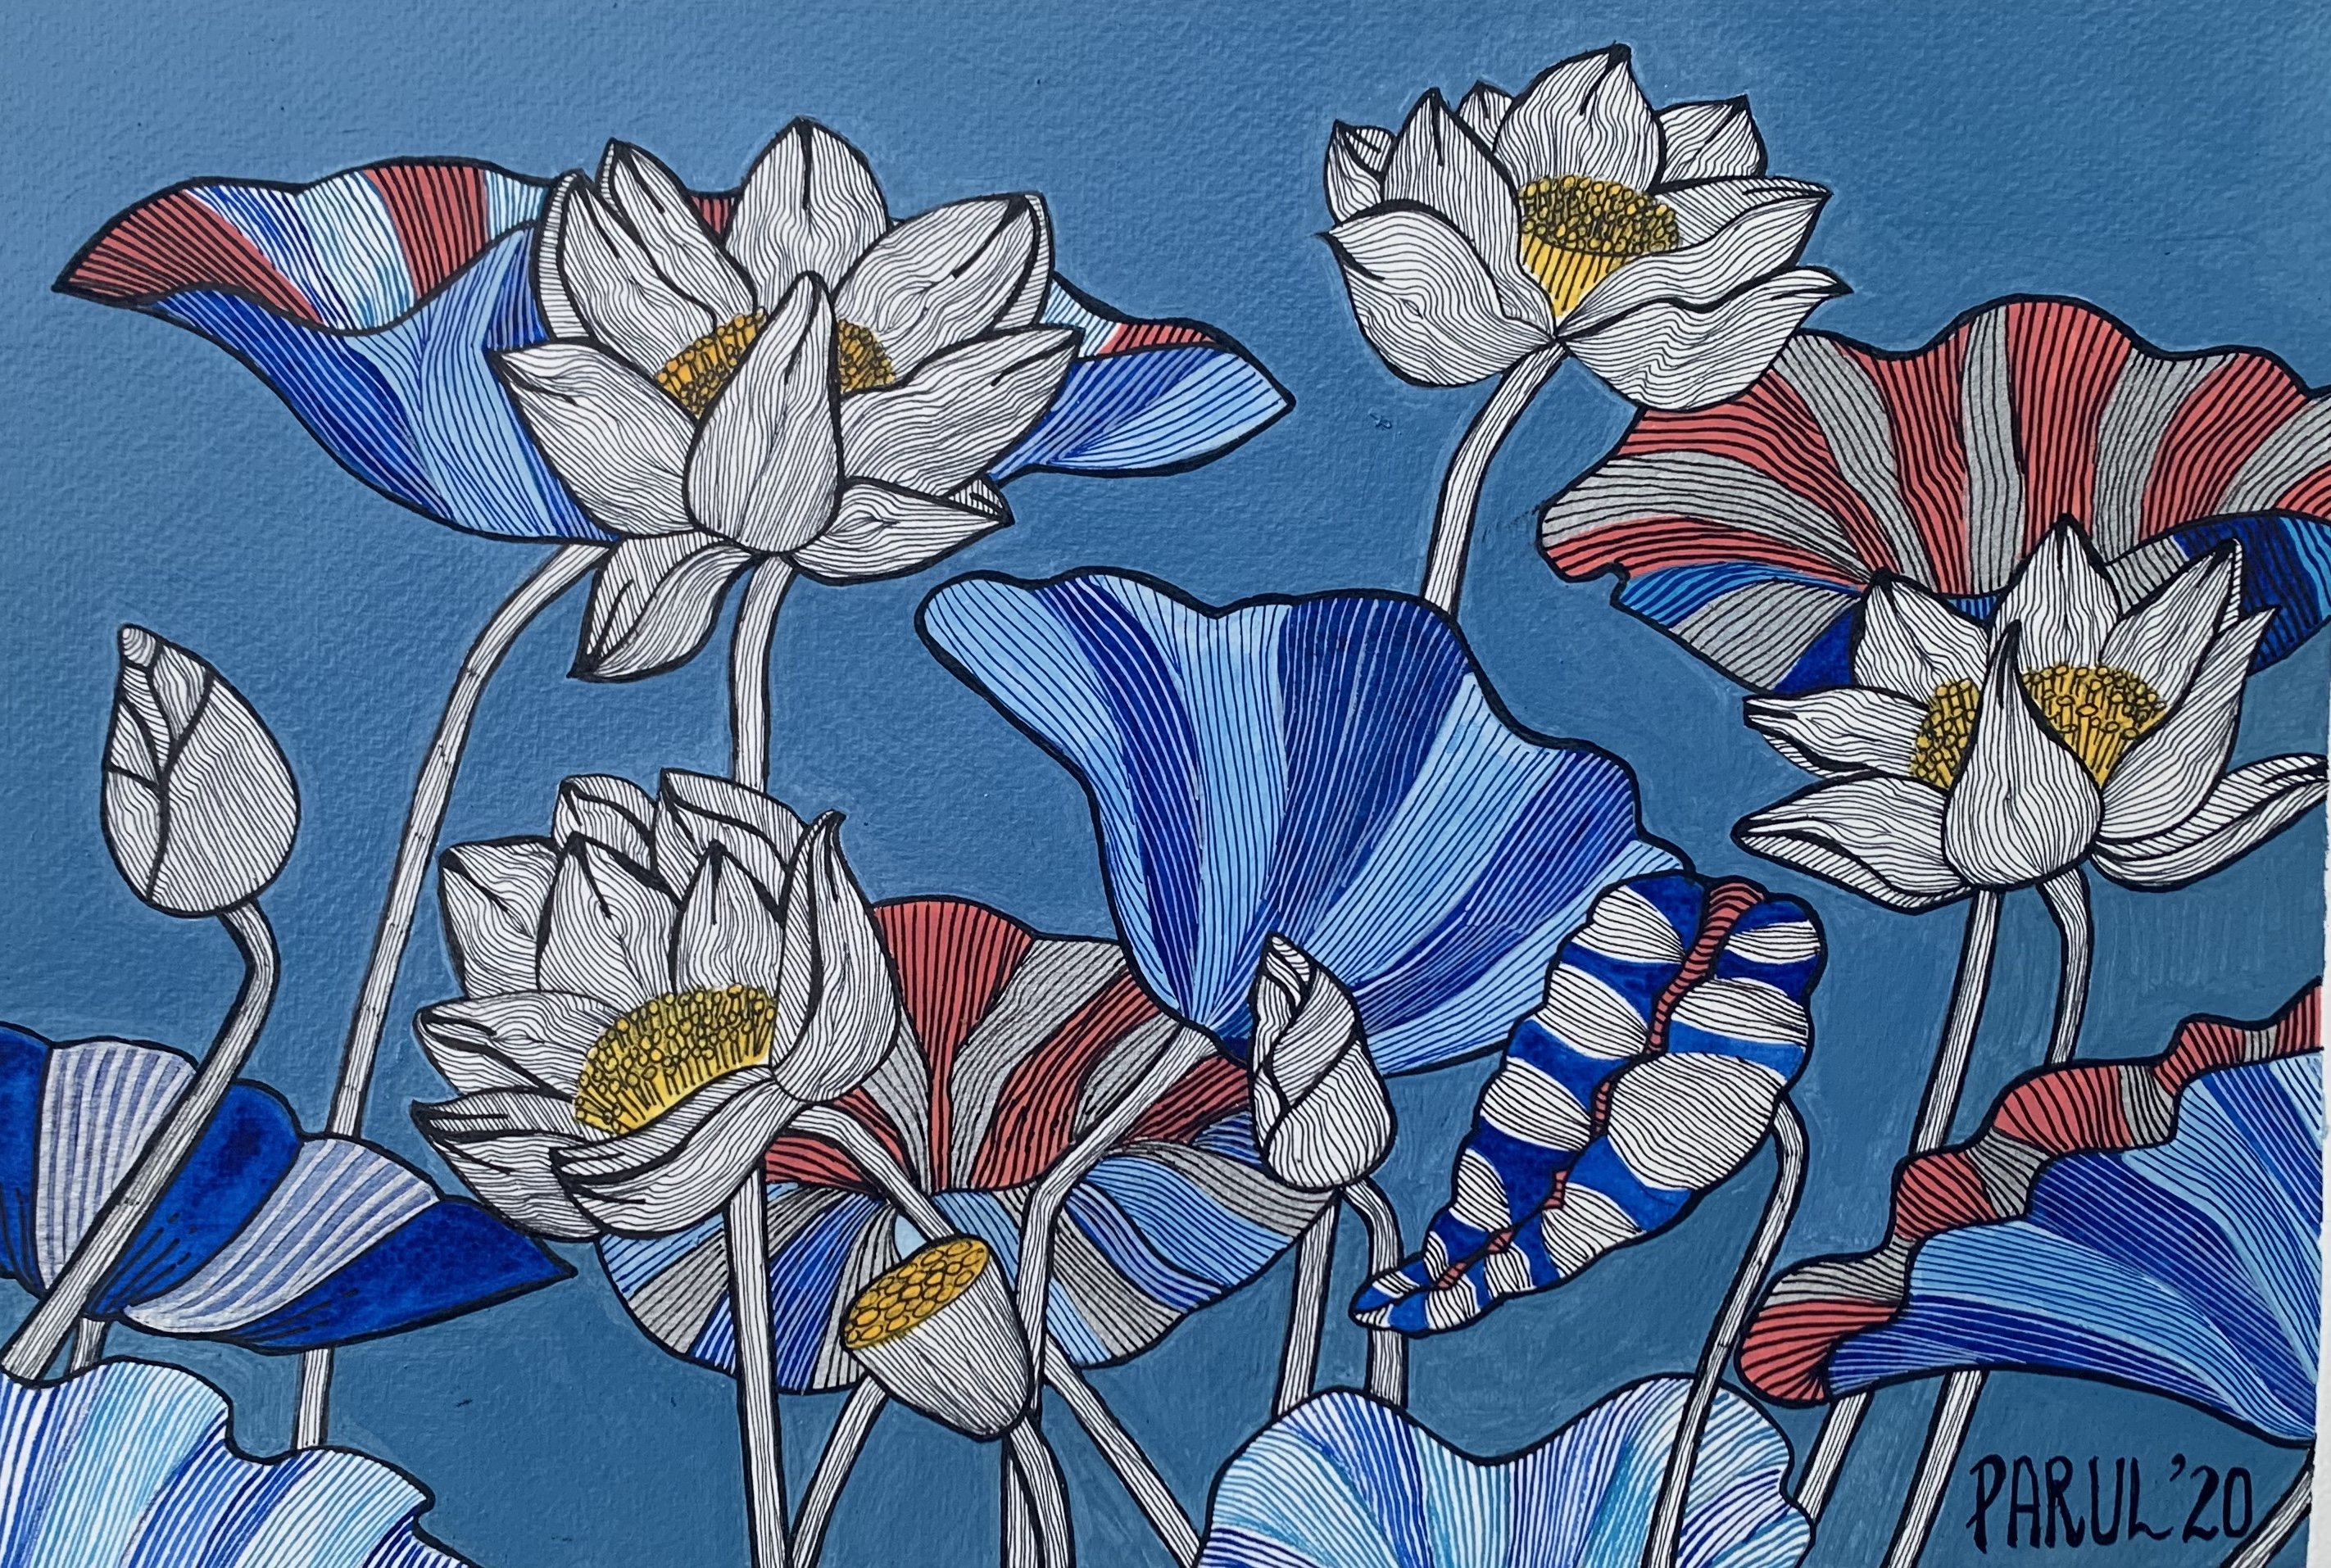 Blue Lotus - Floral Paradise Series